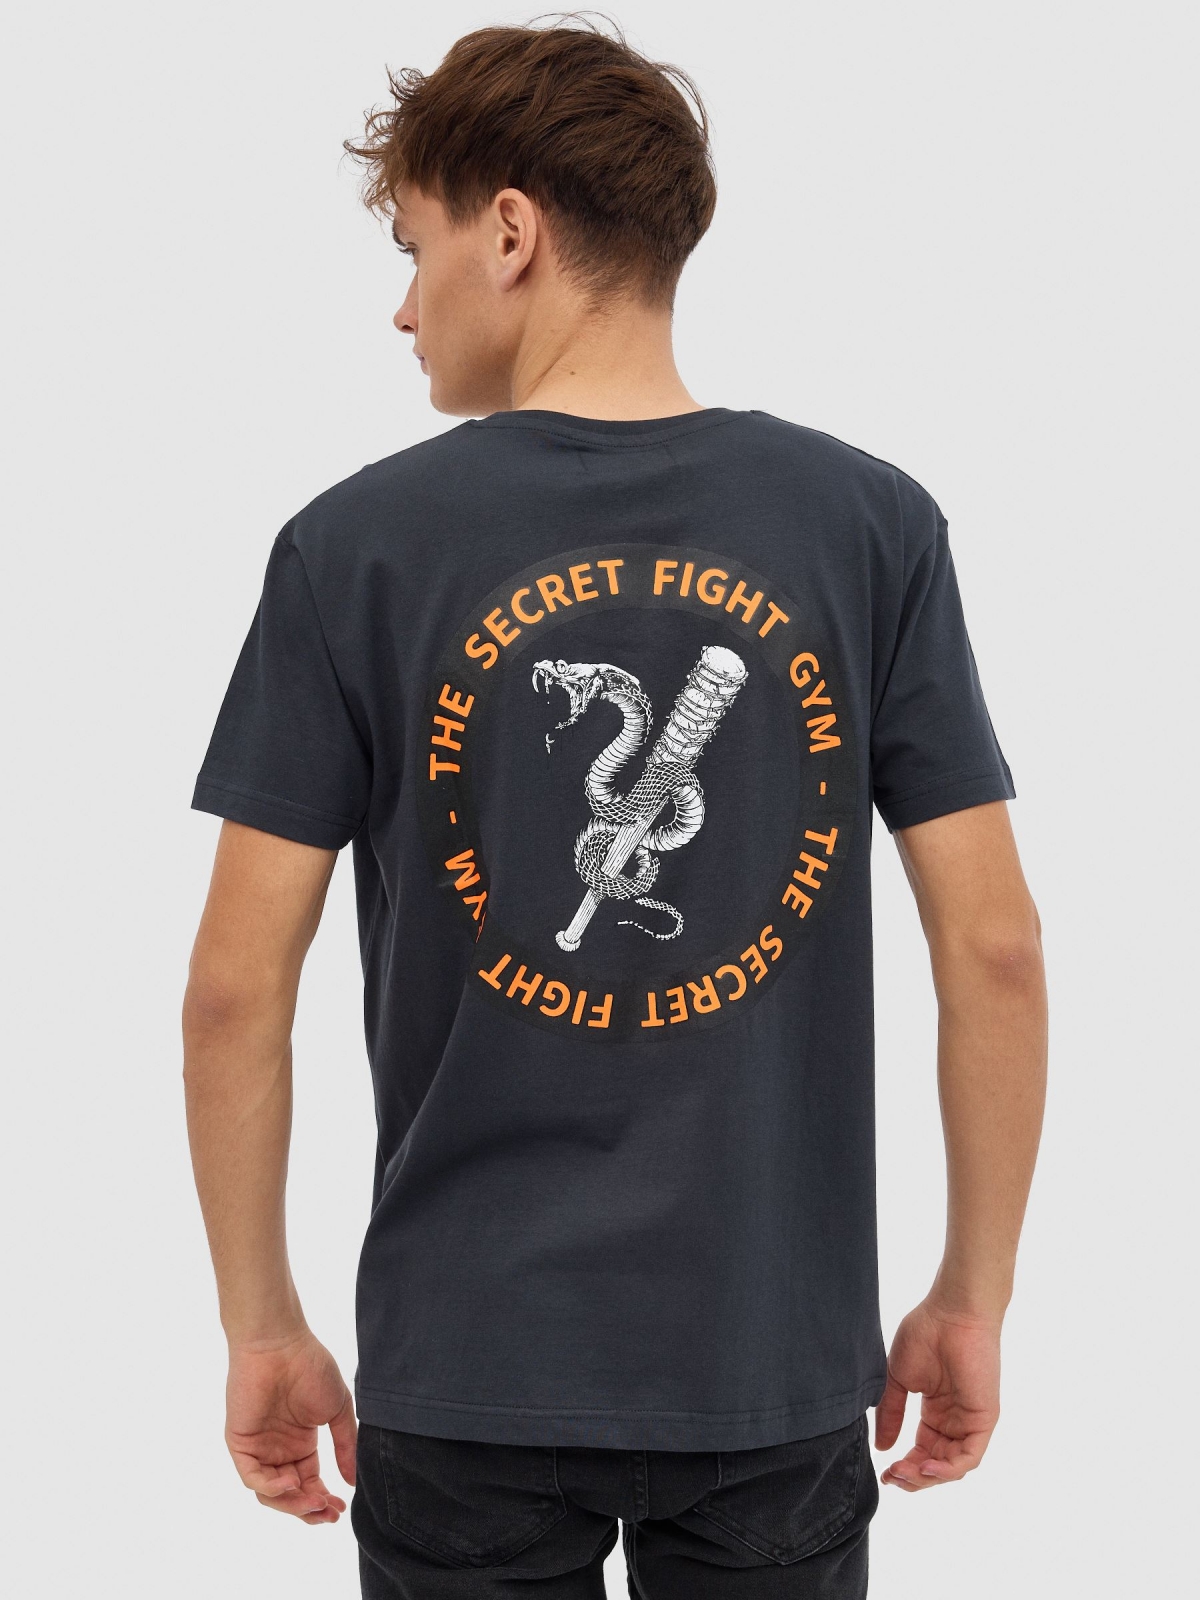 T-shirt "Secret fight" cinza escuro vista meia traseira